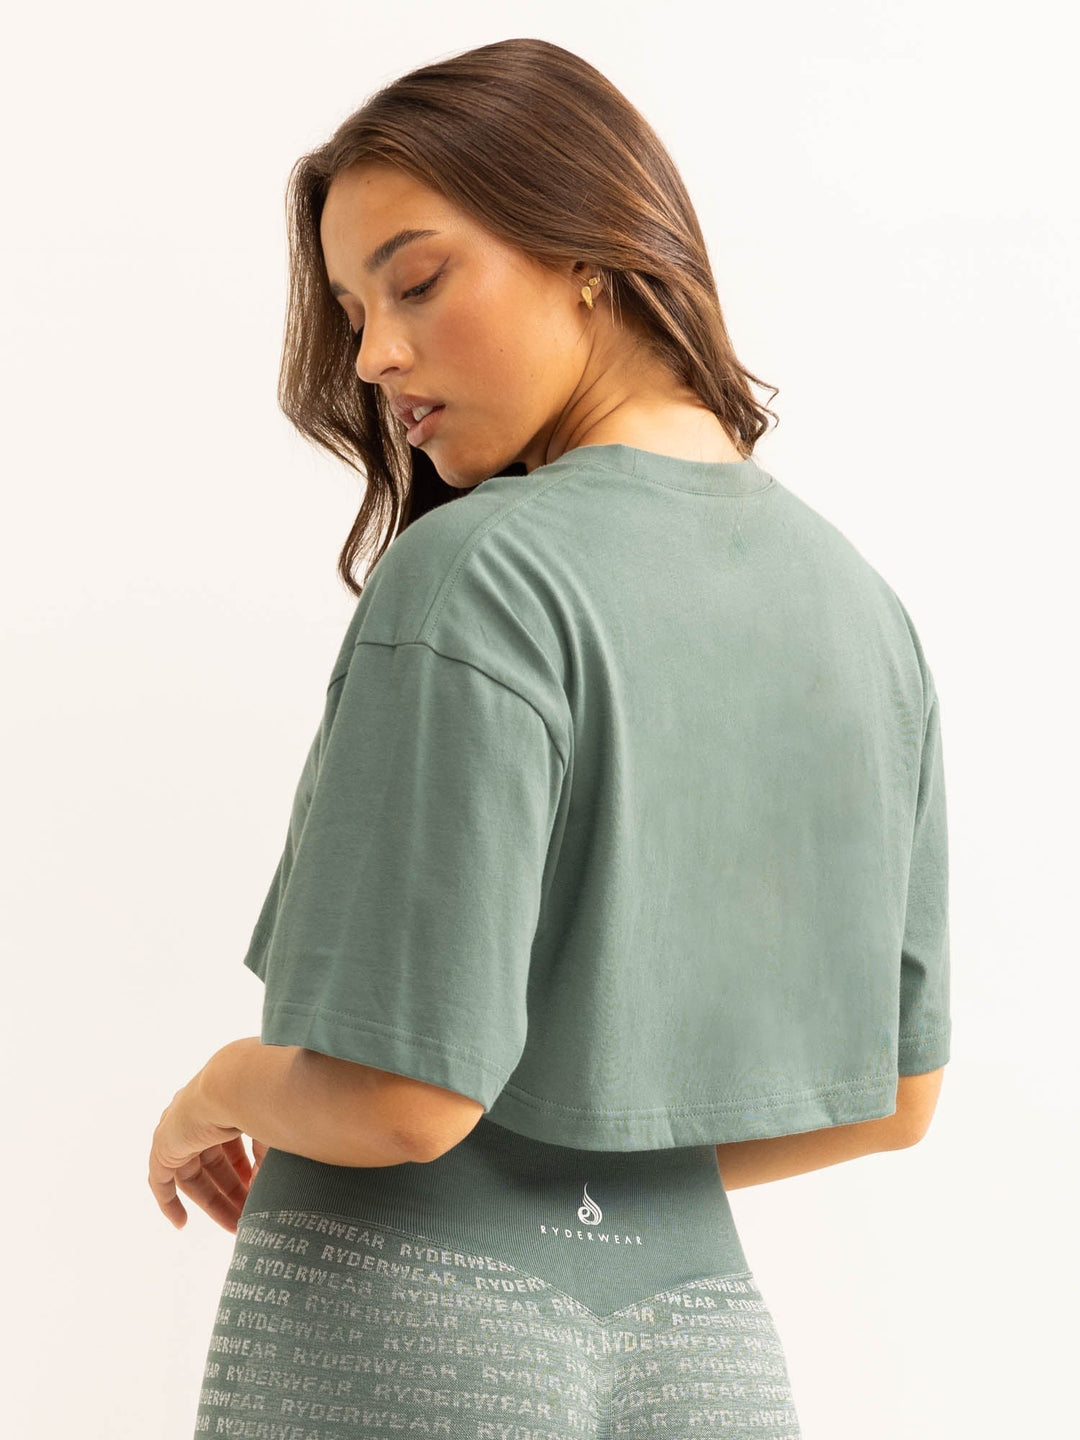 You vs You T-Shirt - Fern Green Clothing Ryderwear 